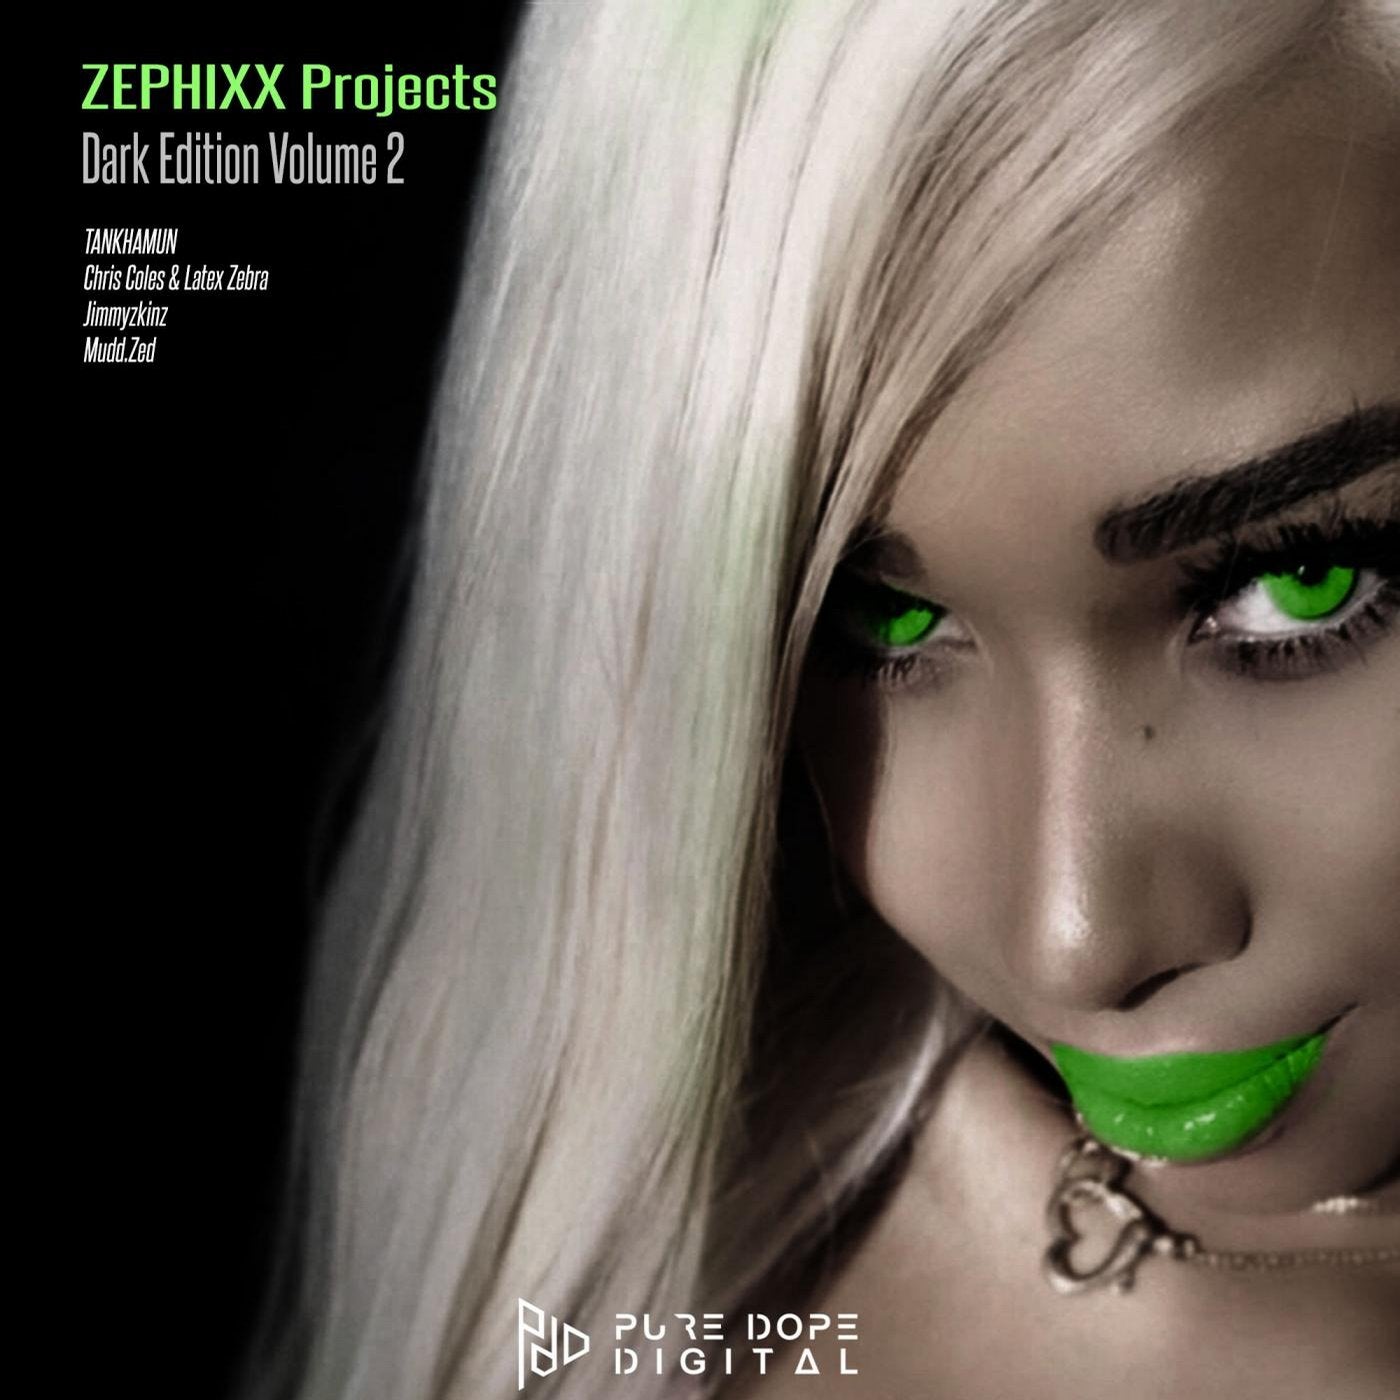 Zephixx Projects Dark Edition Volume 2